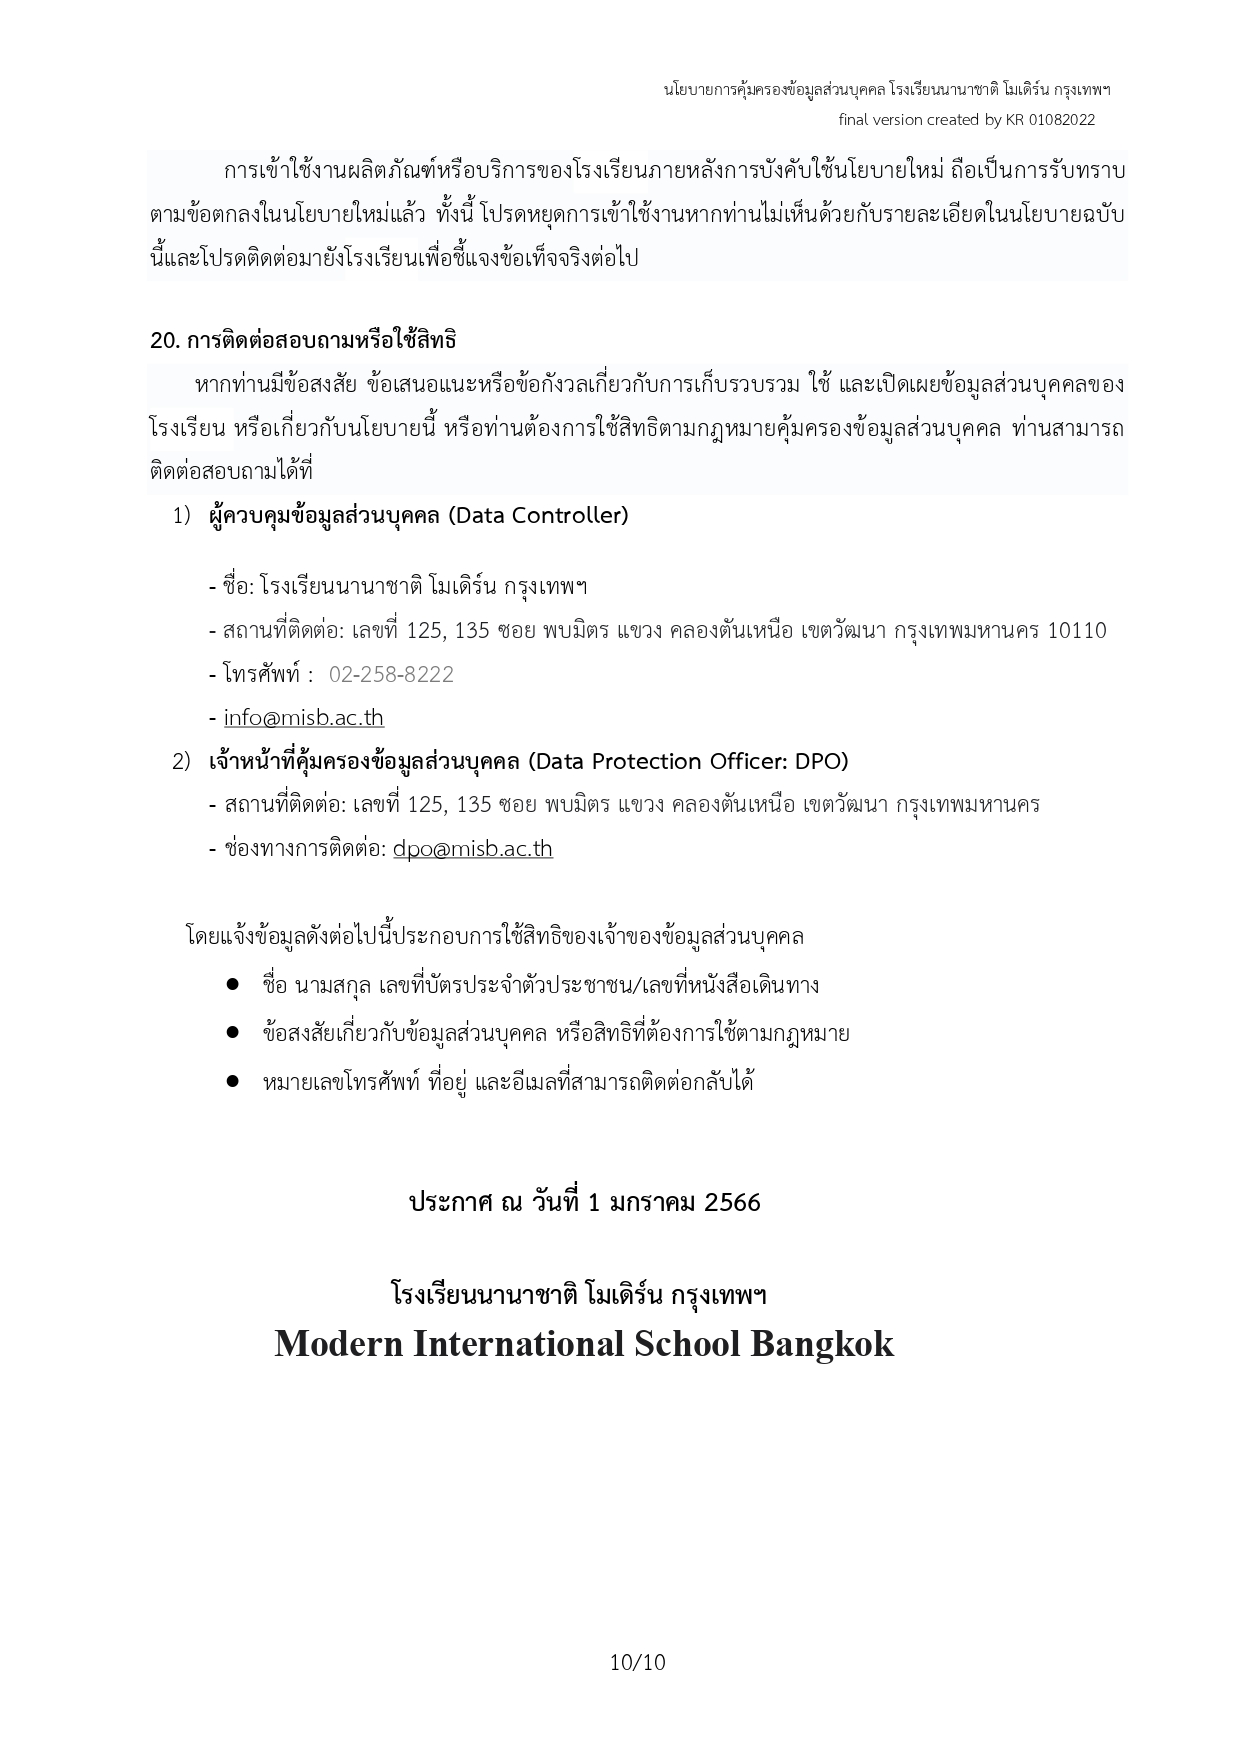 PDPA MISB ภาษาไทย final version 01012566 ไม่ลงชื่อ page 0010